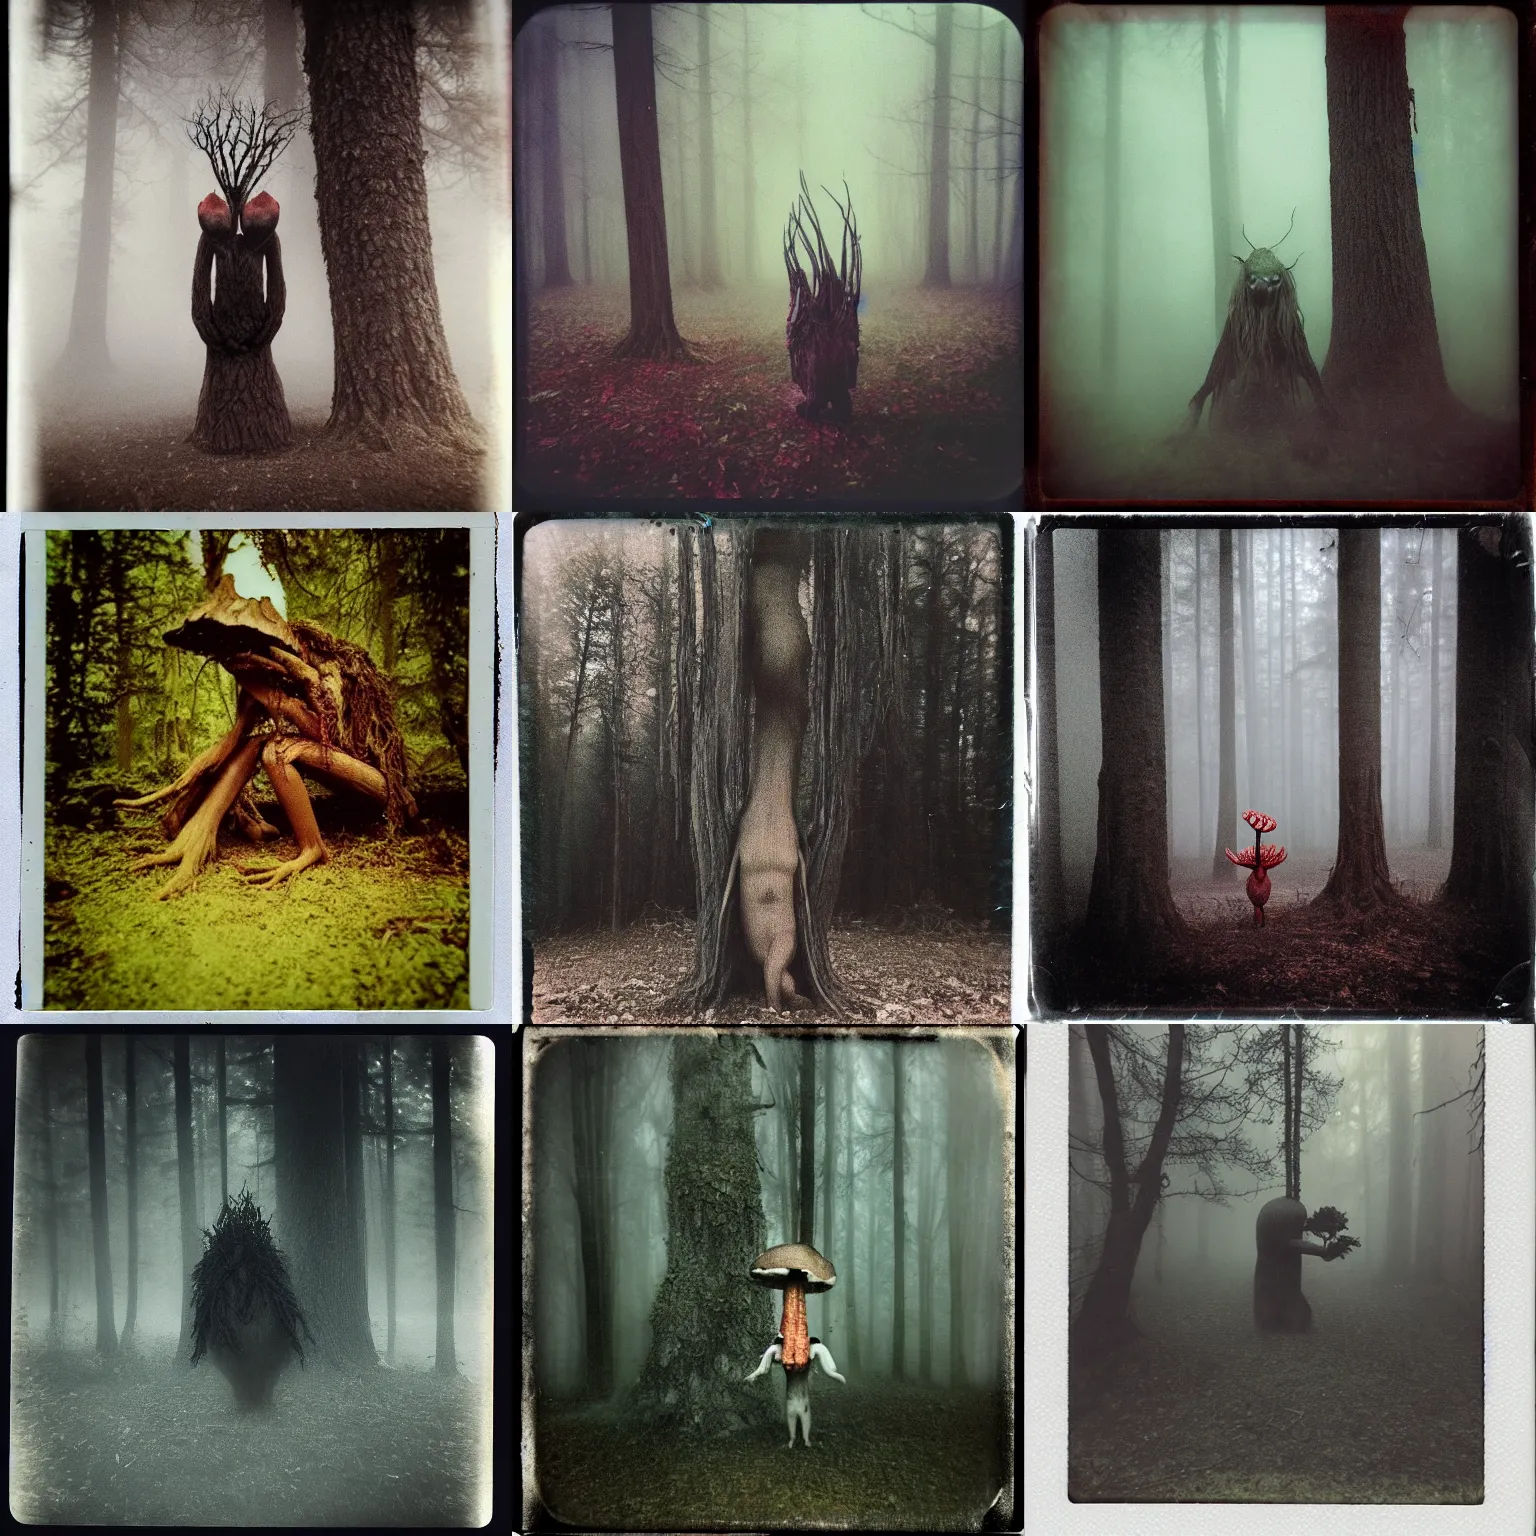 Prompt: anthropomorphic tree creature eating mushrooms, dark fantasy horror, ominous, disturbing, nightmarish, foggy, eerie mist, low quality instant camera photo